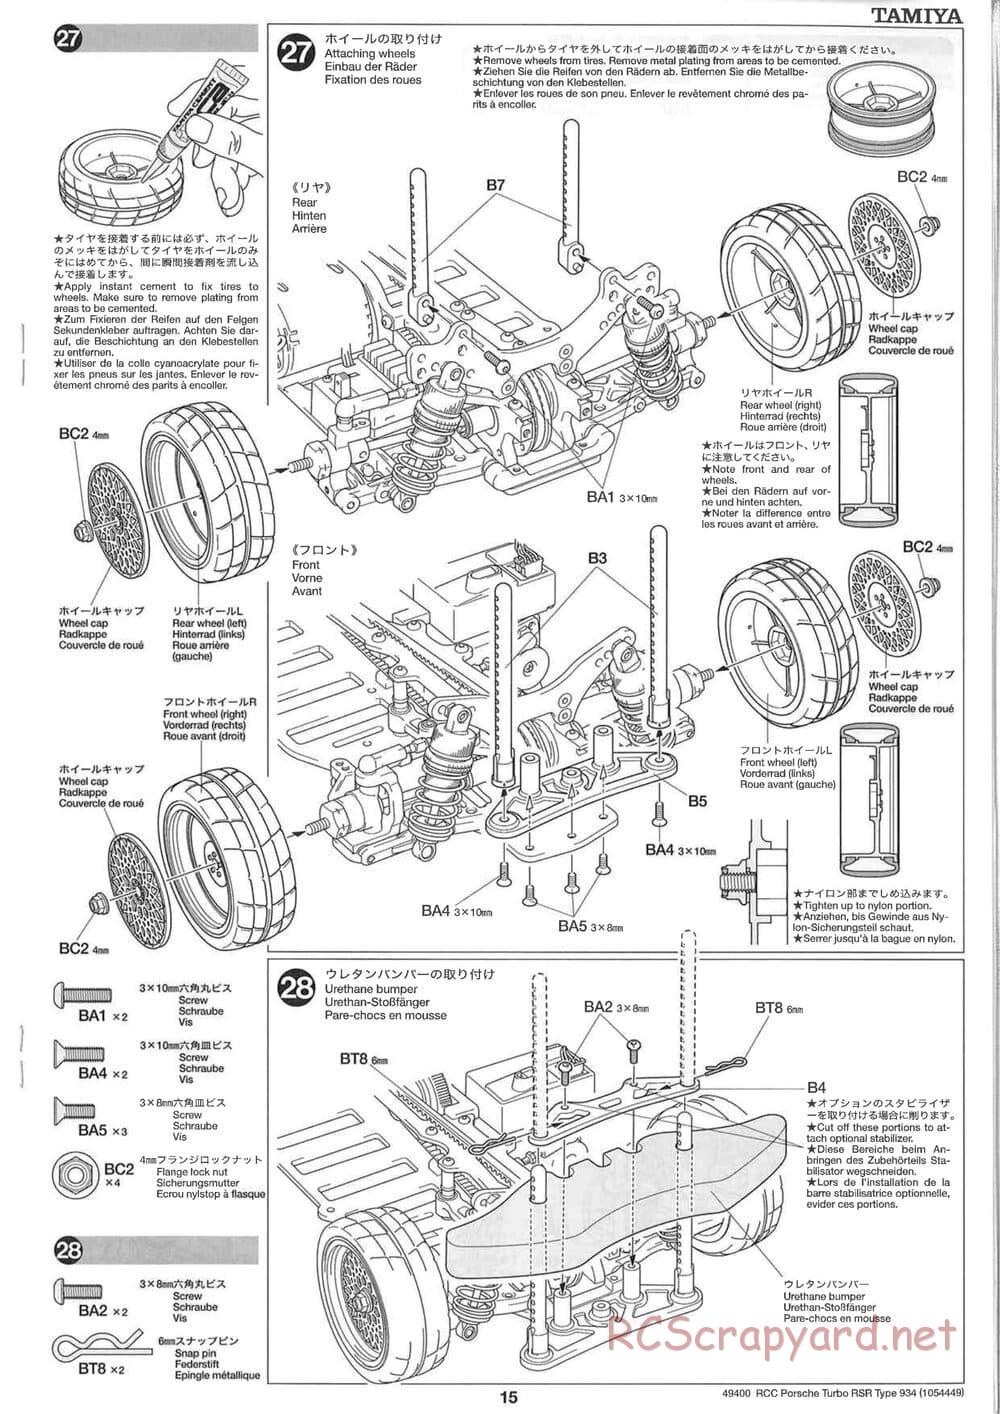 Tamiya - Porsche Turbo RSR Type 934 - TA05 Chassis - Manual - Page 15